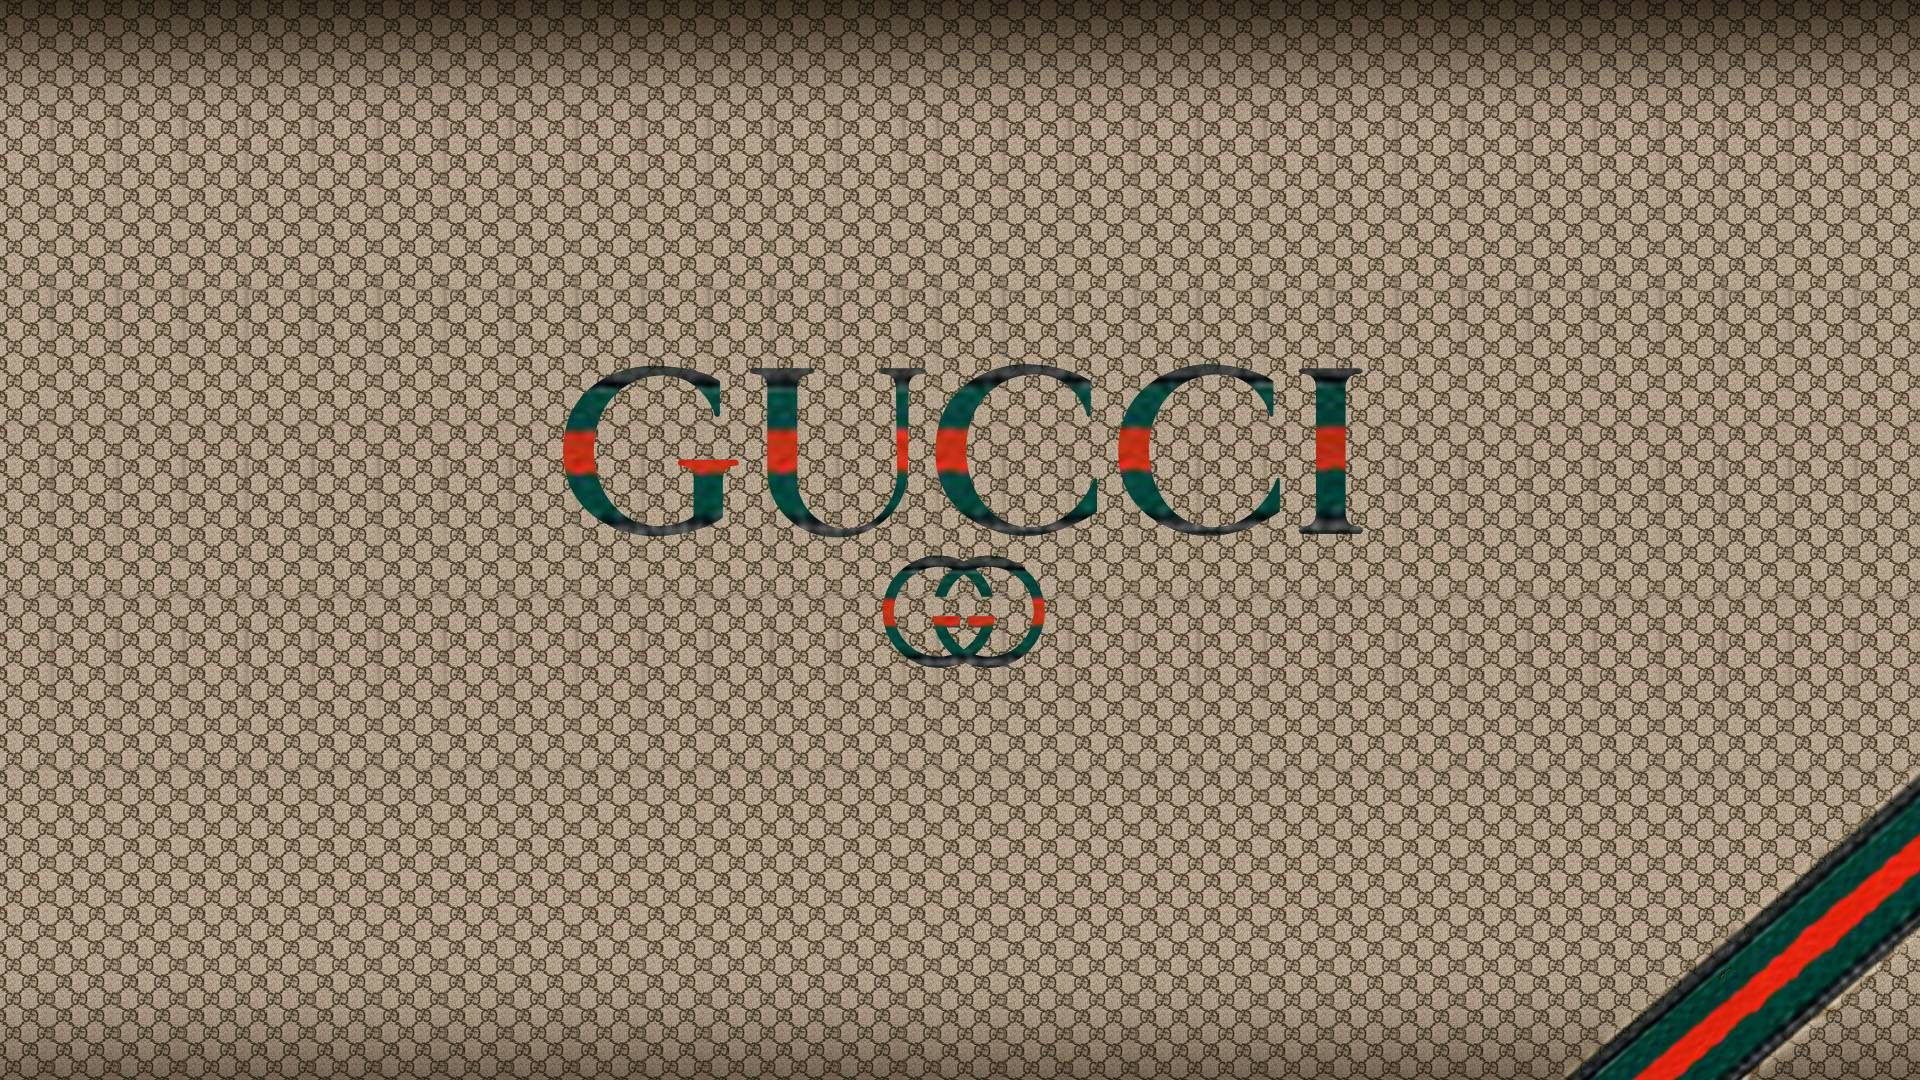 100+] Supreme Gucci Wallpapers